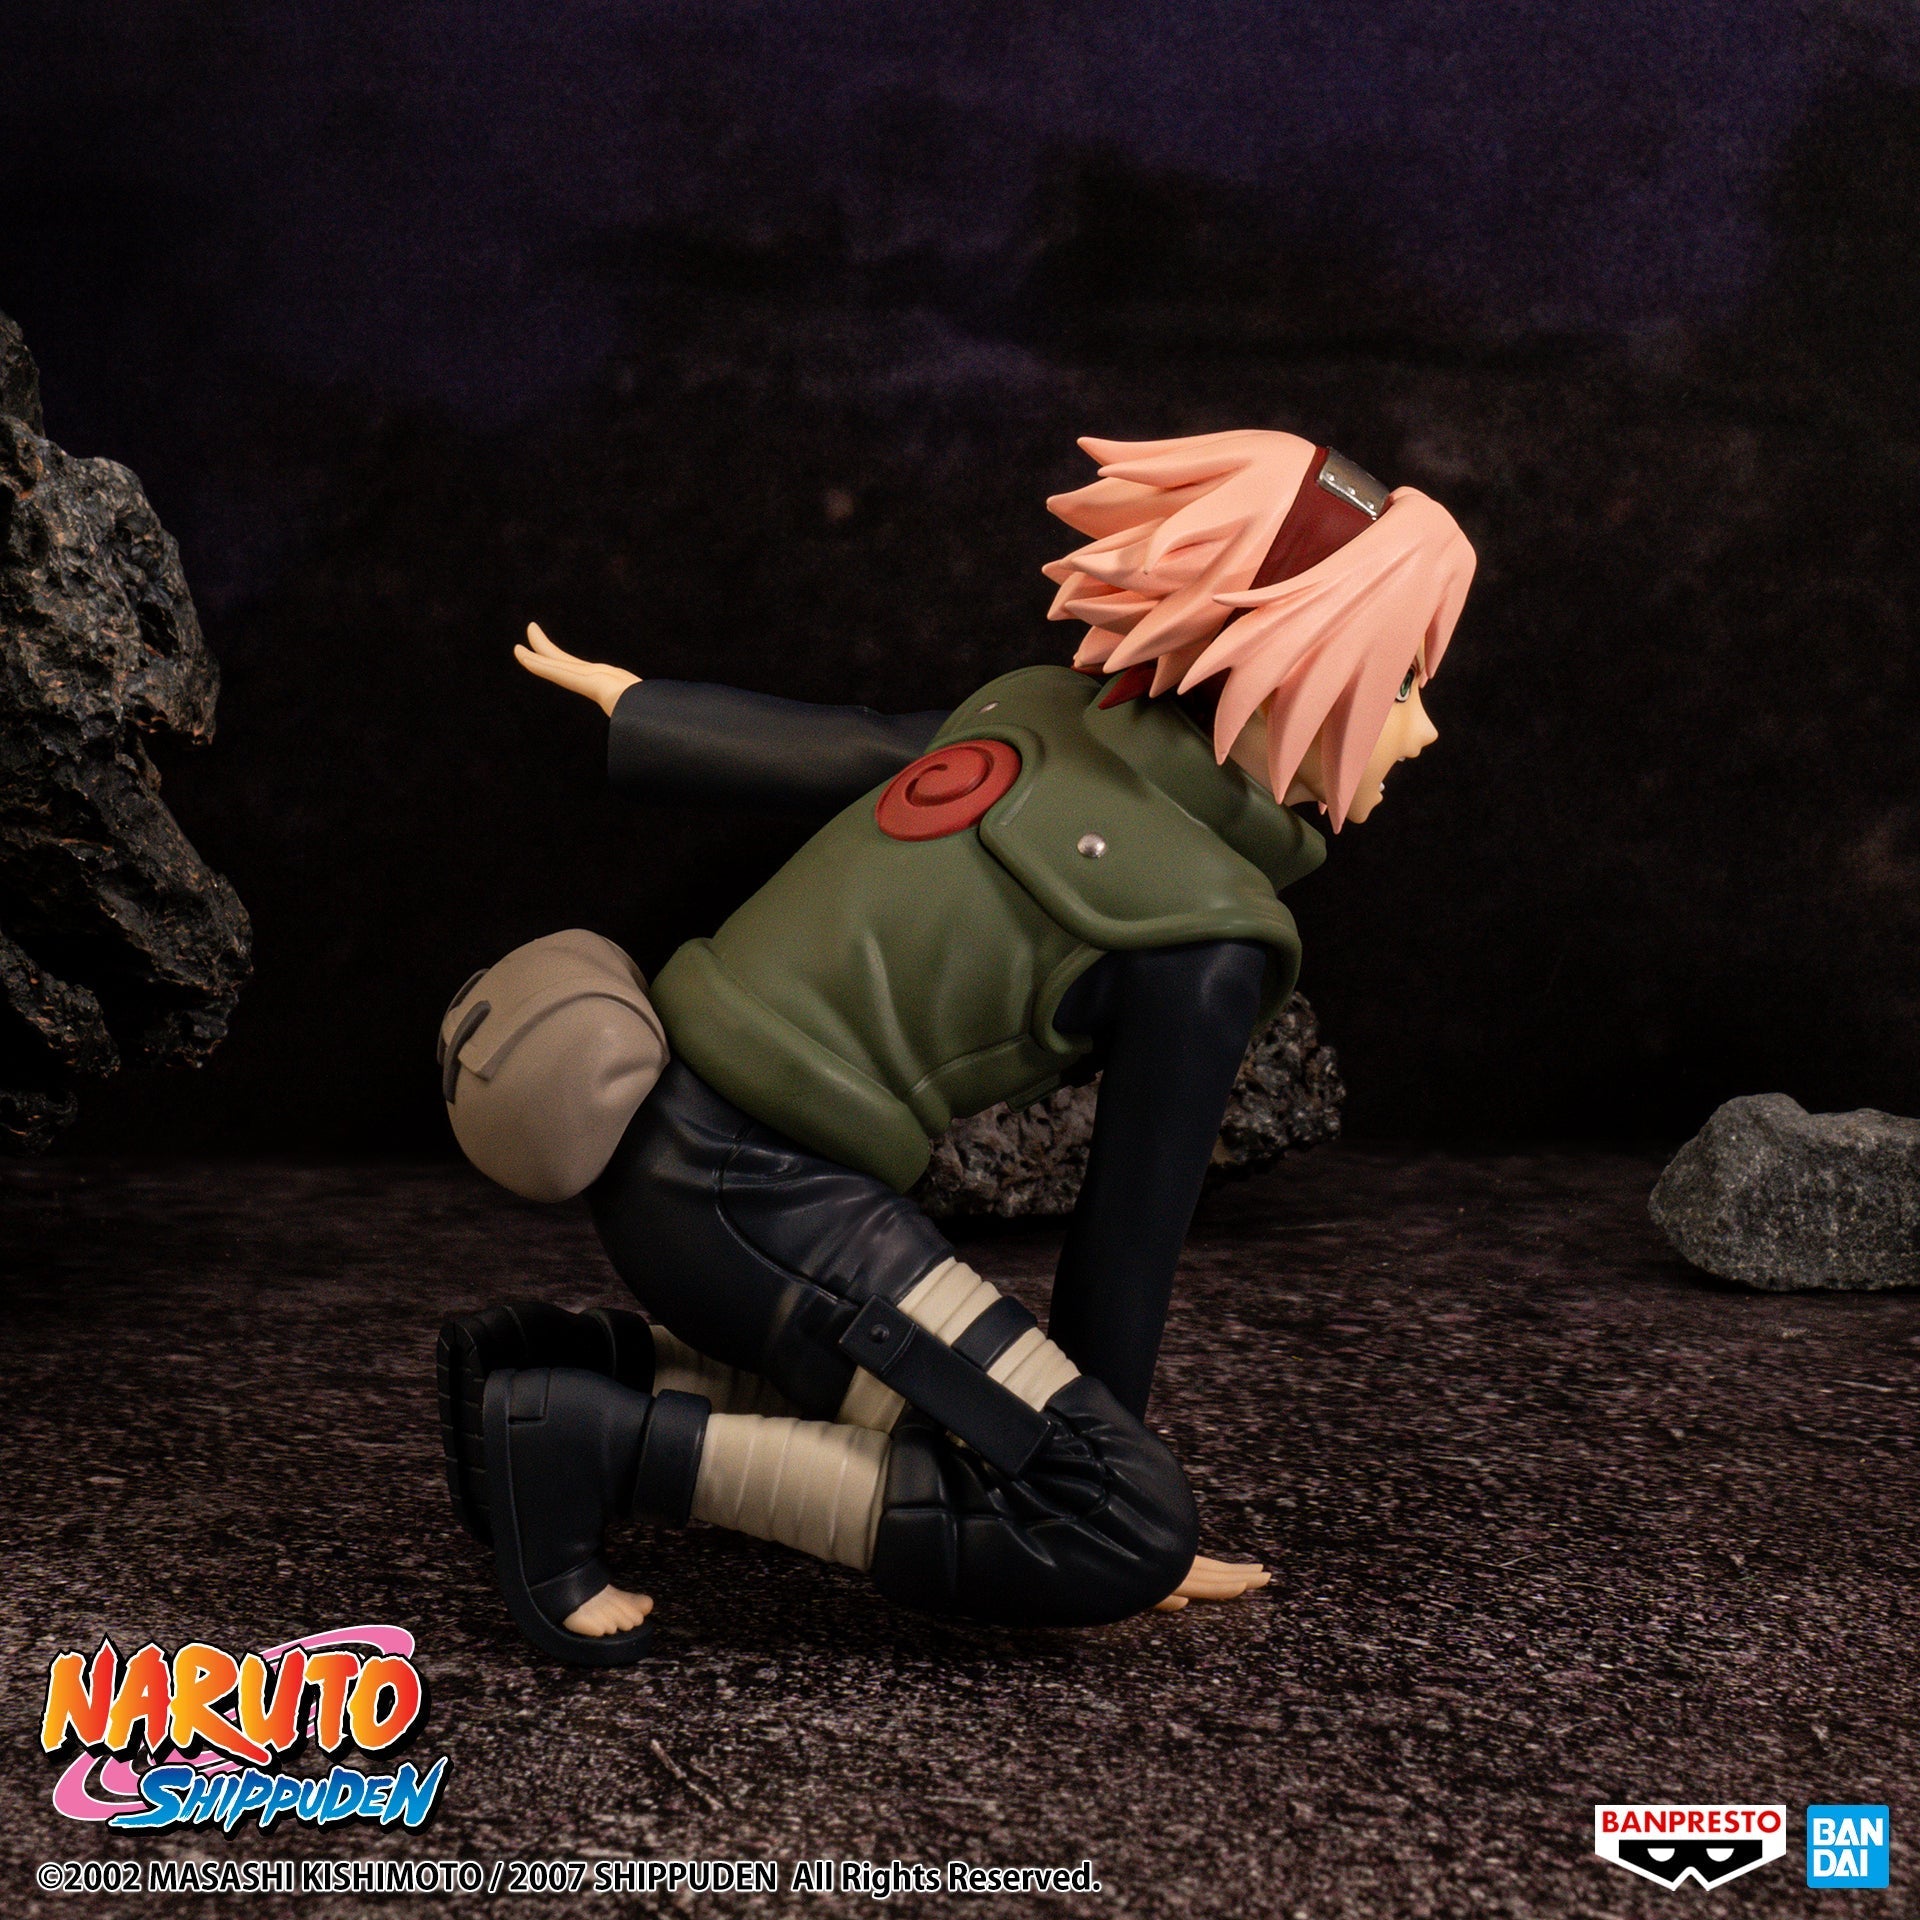 Naruto Shippuden - Haruno Sakura Panel Spectacle Figure image count 7